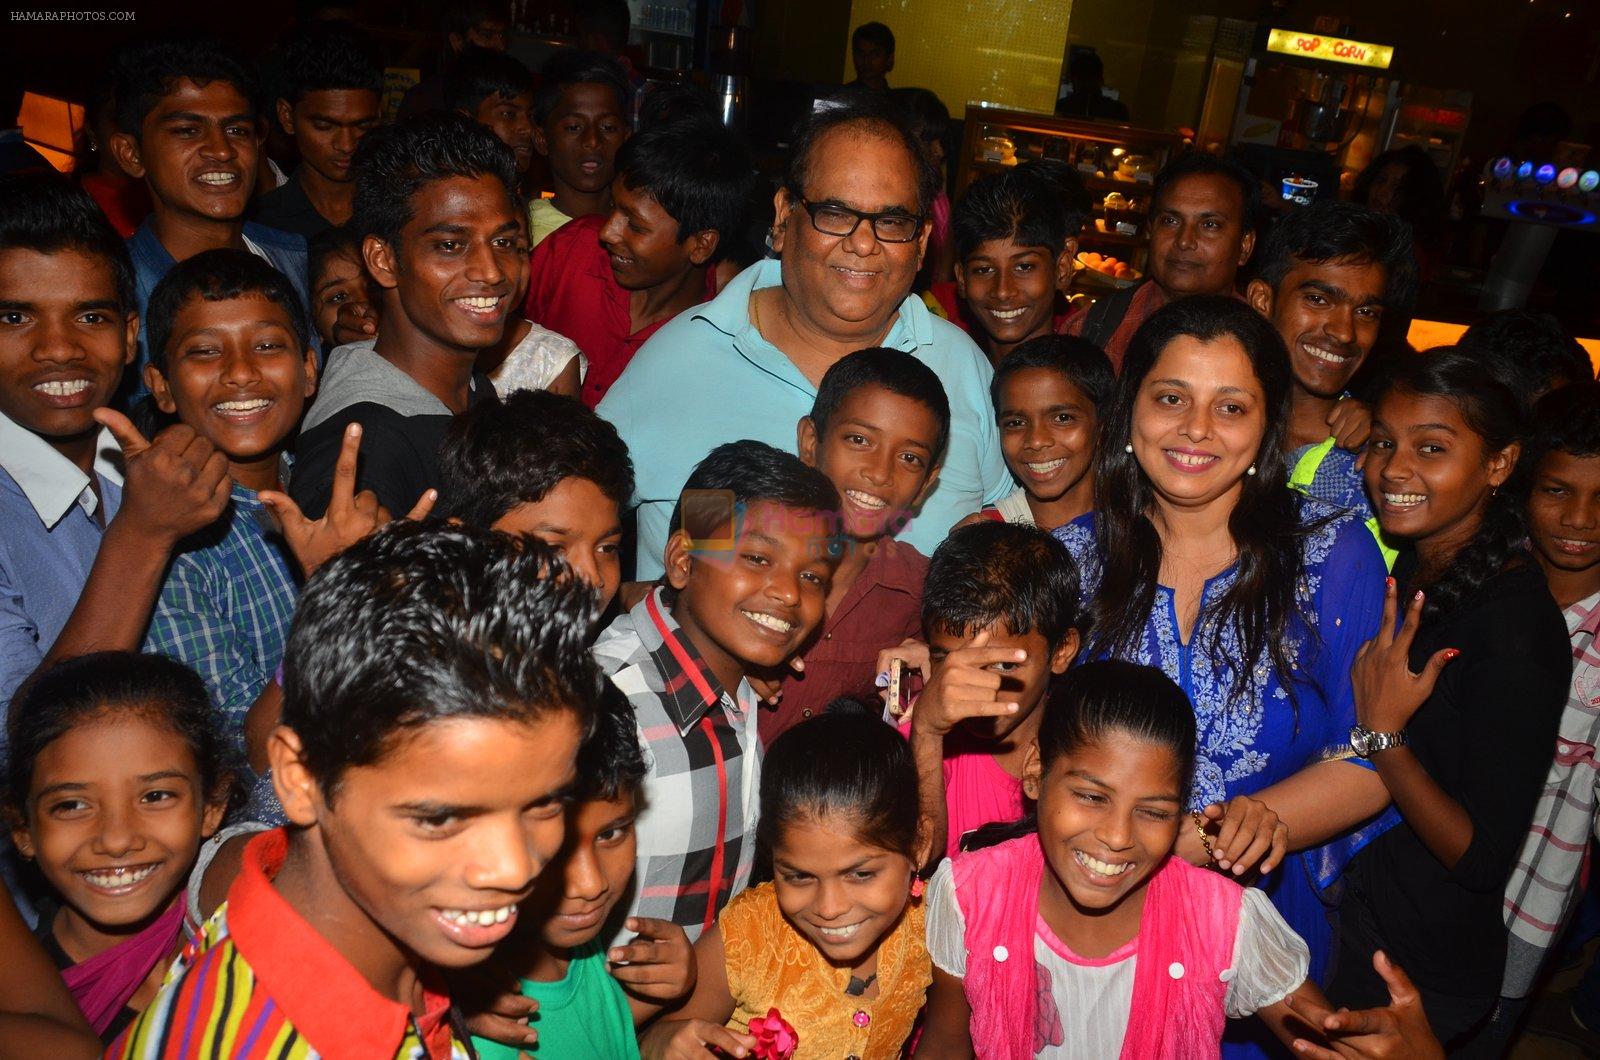 Satish Kaushik at Vatsalya screening on 9th June 2016